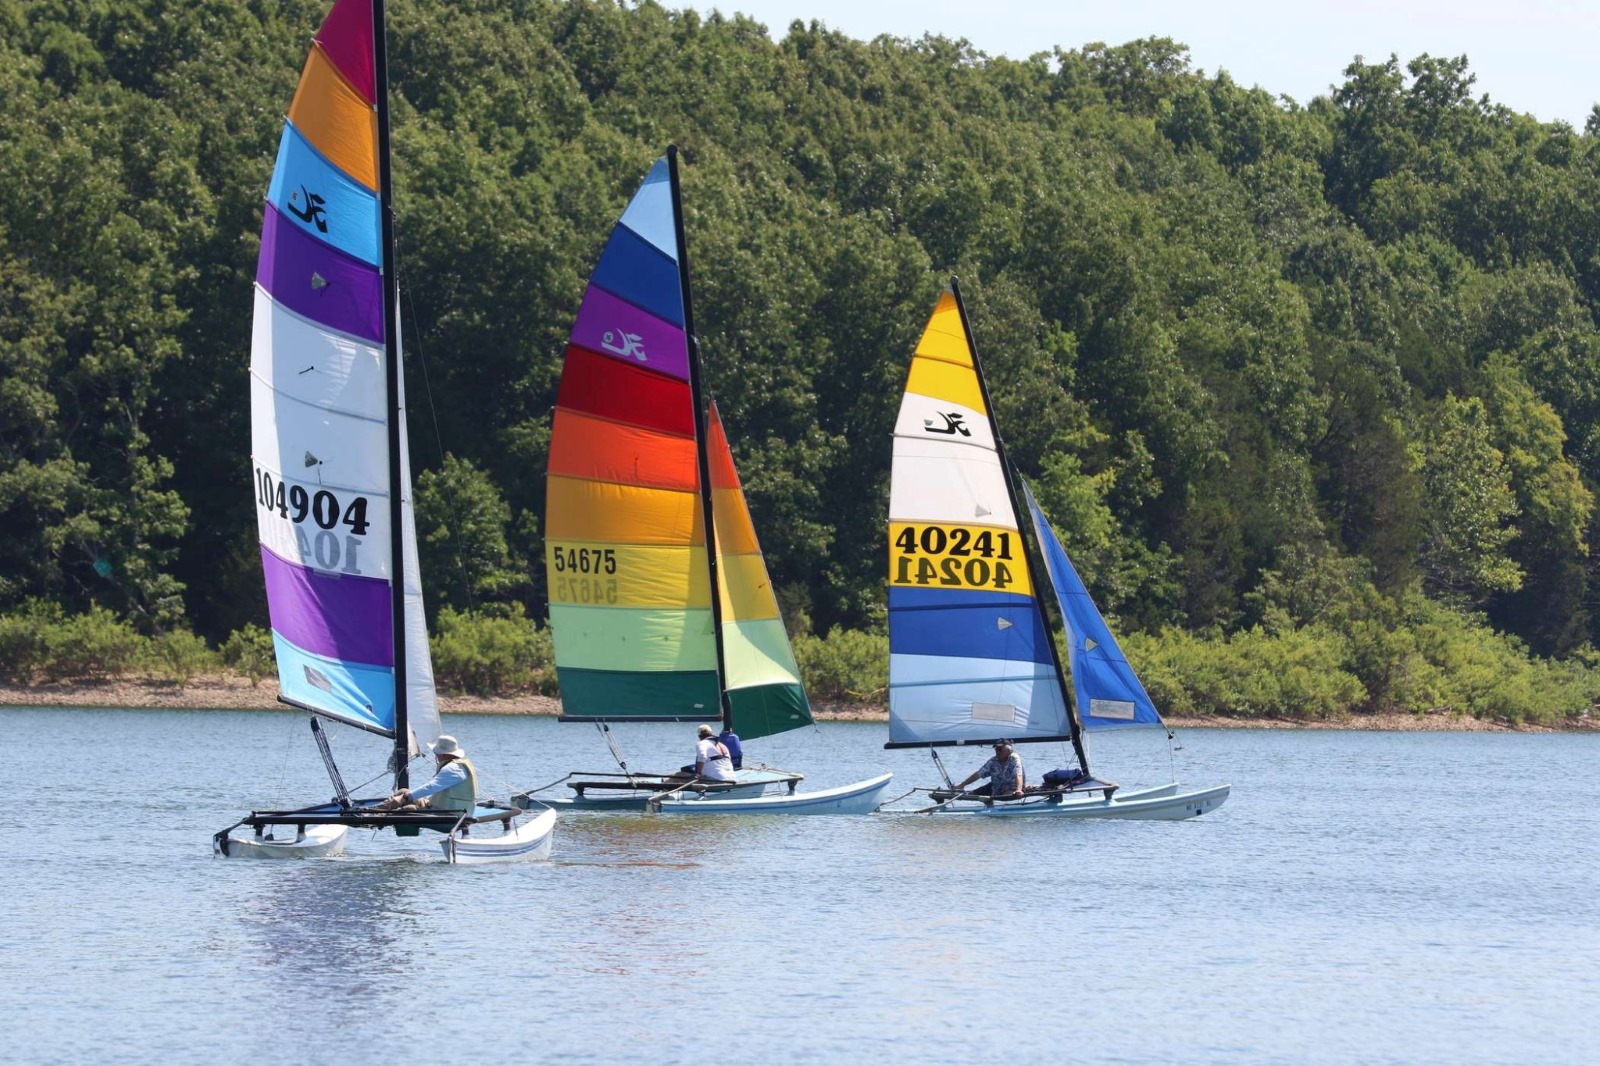 Three sailboats on Fellows Lake in Springfield, Missouri